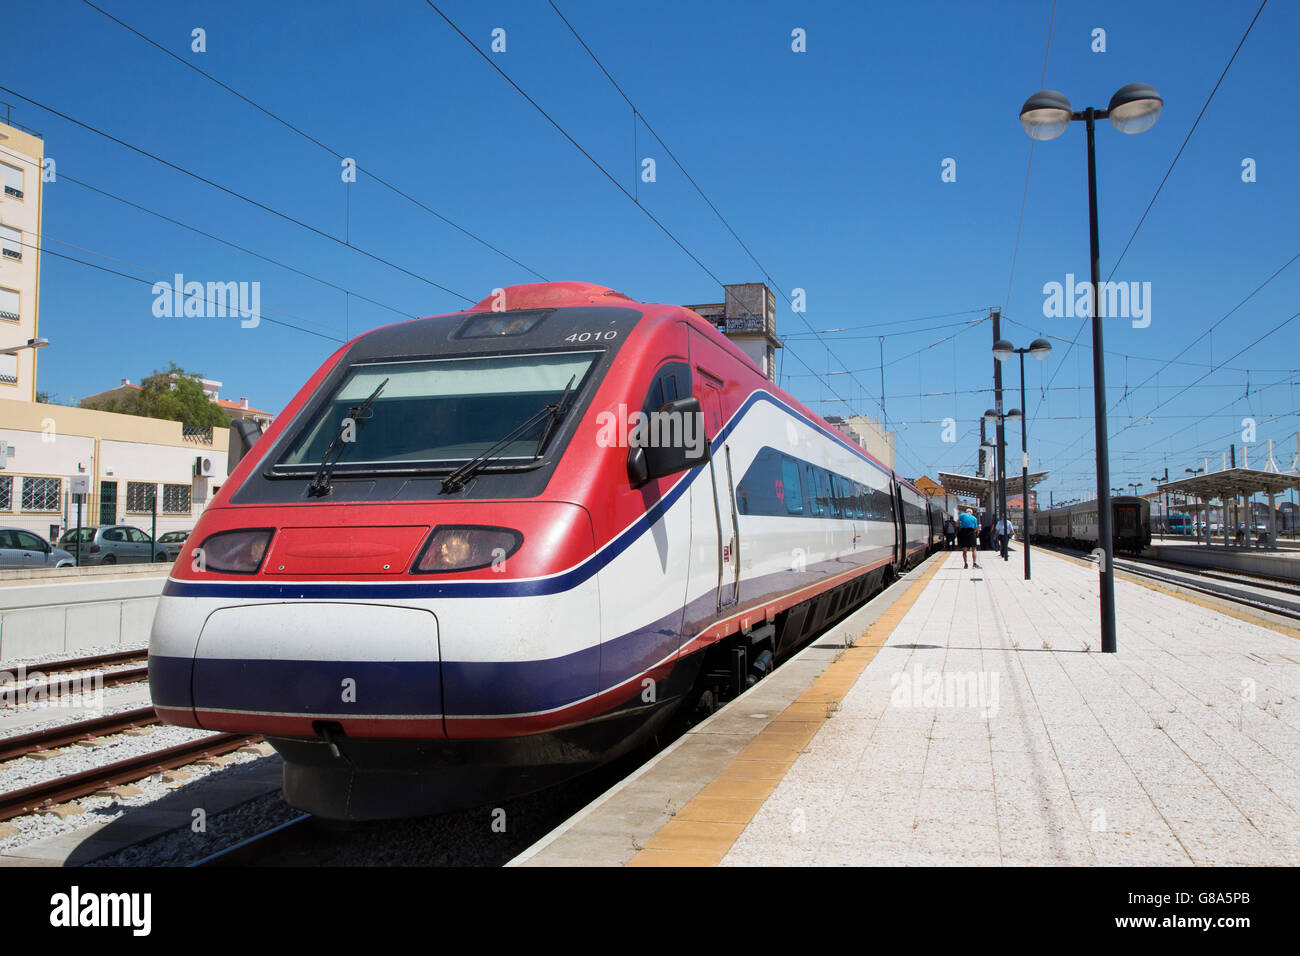 High Speed Alfa Pendular tilting train at Tunes railway station in the Algarve, Portugal Stock Photo